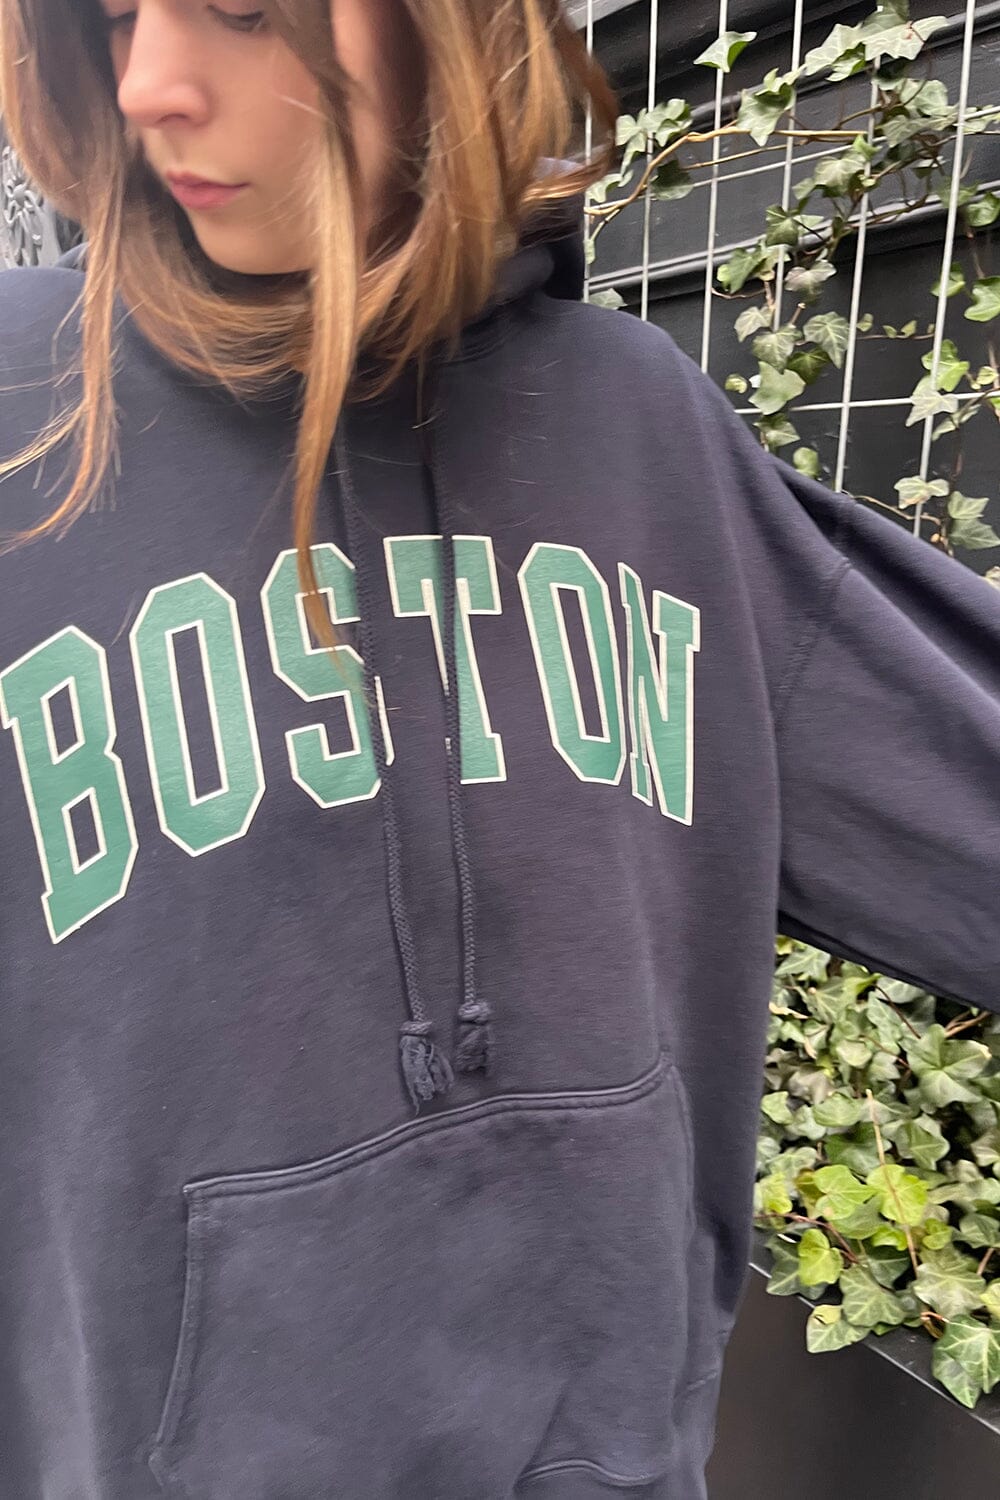 Christy Boston Hoodie  Brandy melville outfits hoodie, Brandy